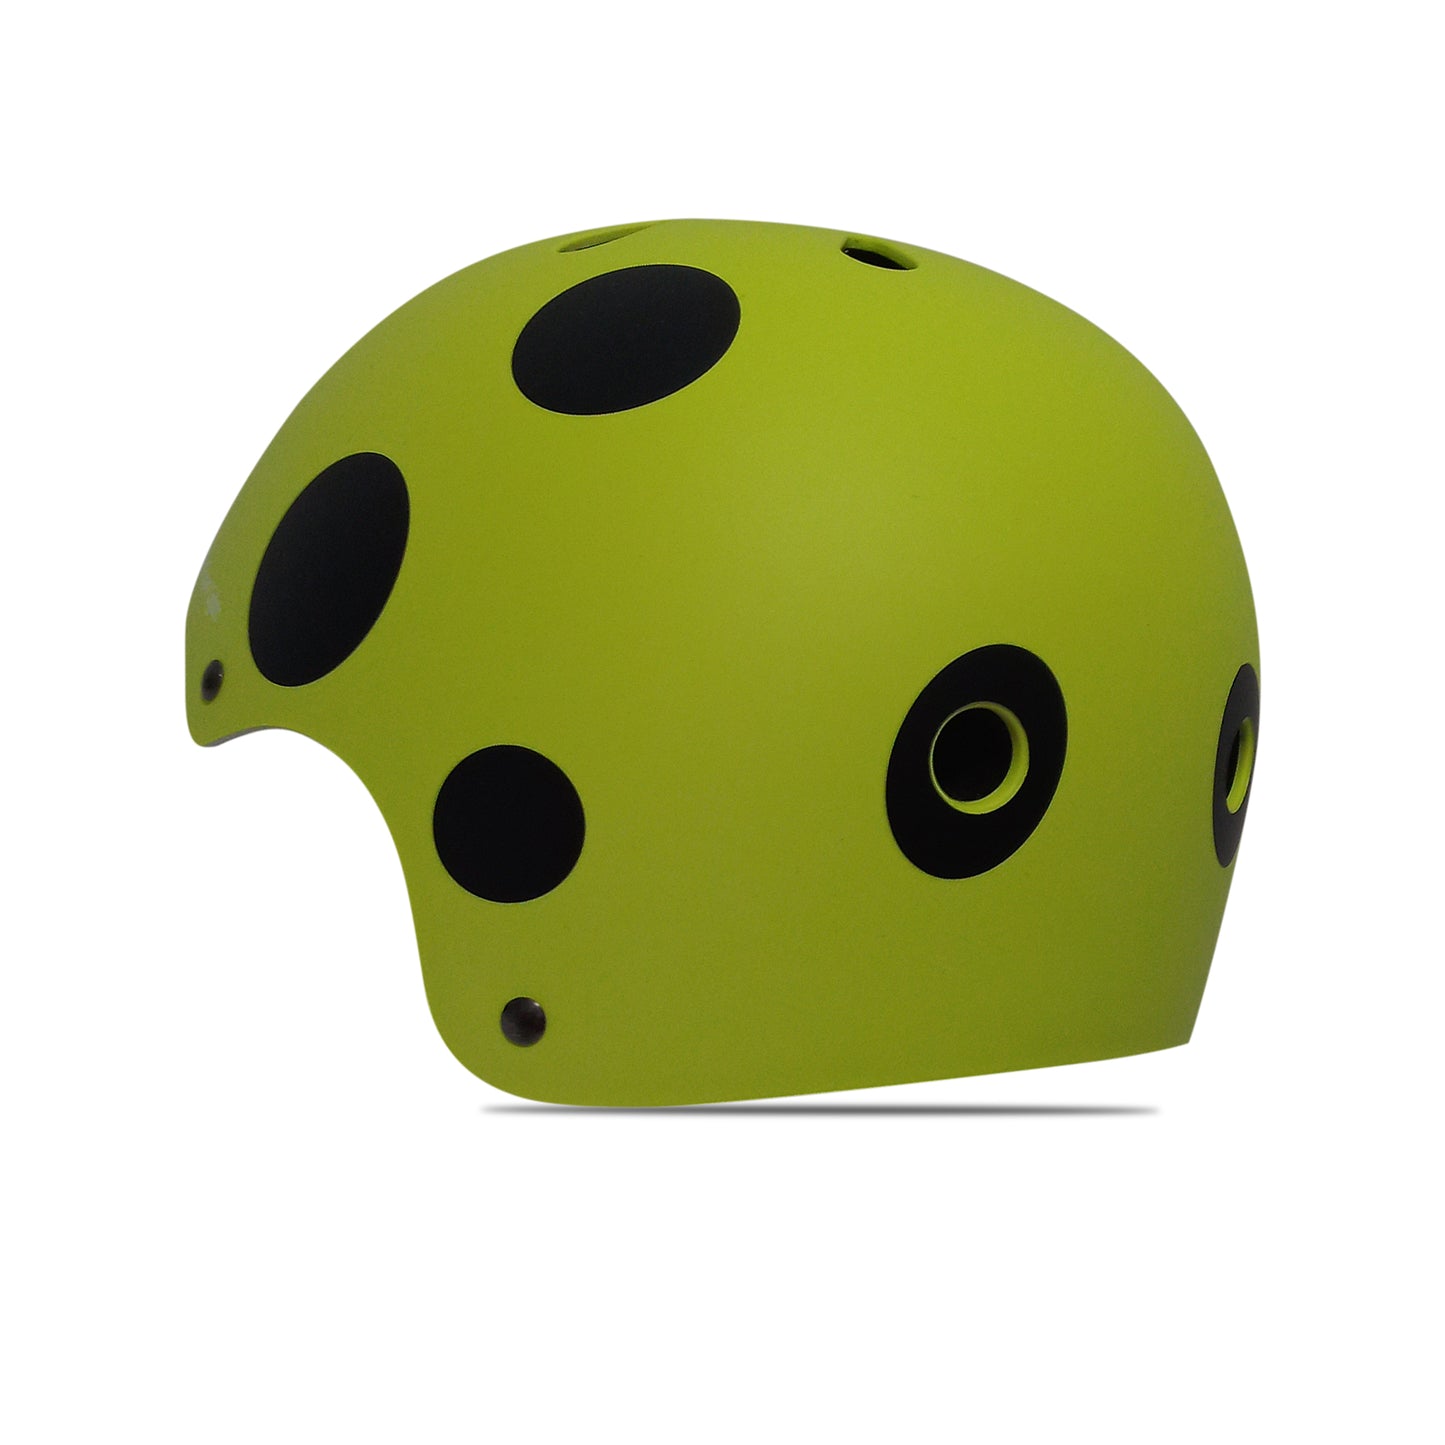 Children's bicycle helmet Pro Sport Lights - Yellow - Small